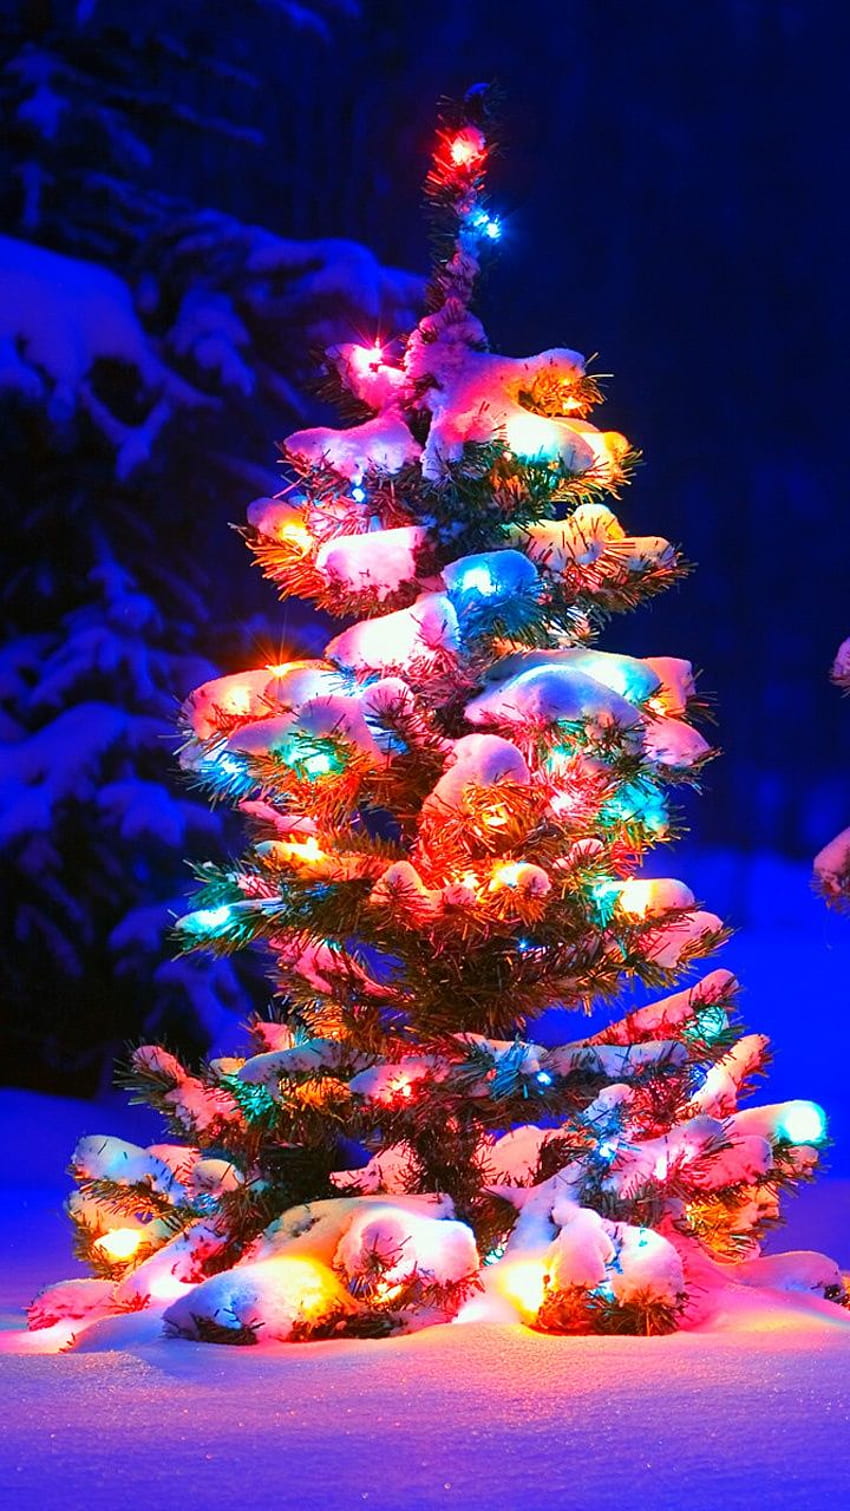 Snowy Christmas Tree Lights in jpg format for HD phone wallpaper